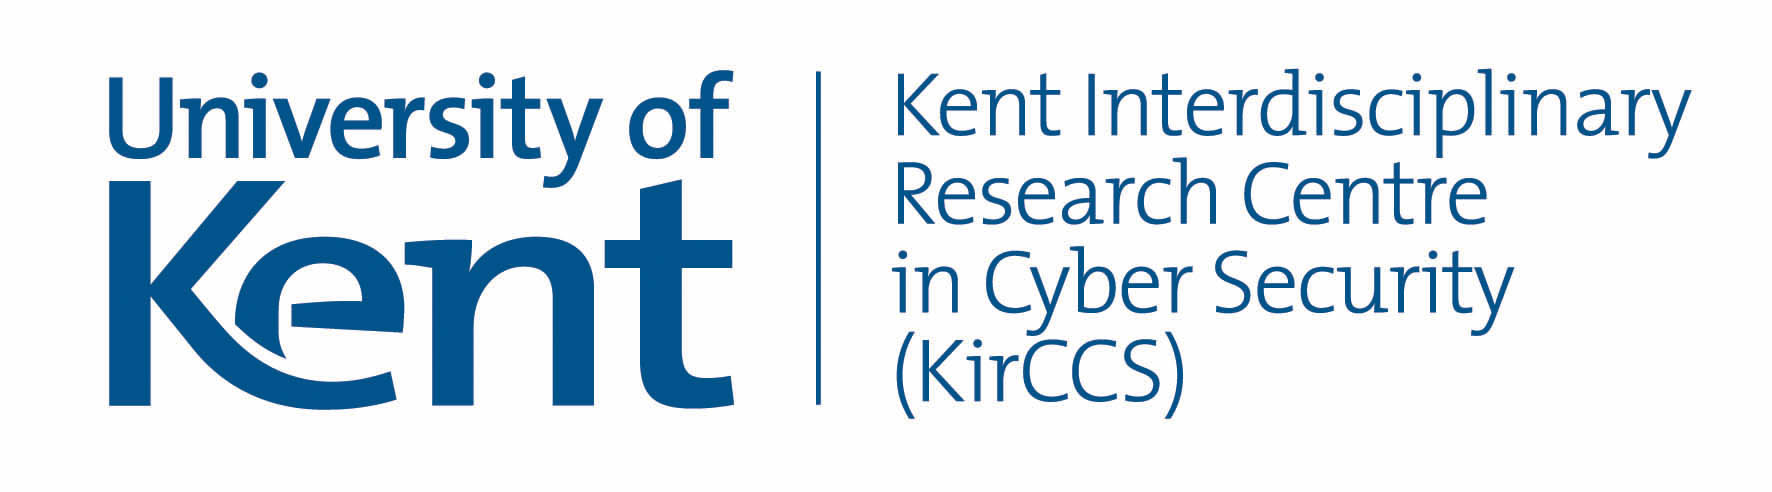 Kent Interdisciplinary Research Centre in Cyber Security (KirCCS), University of Kent